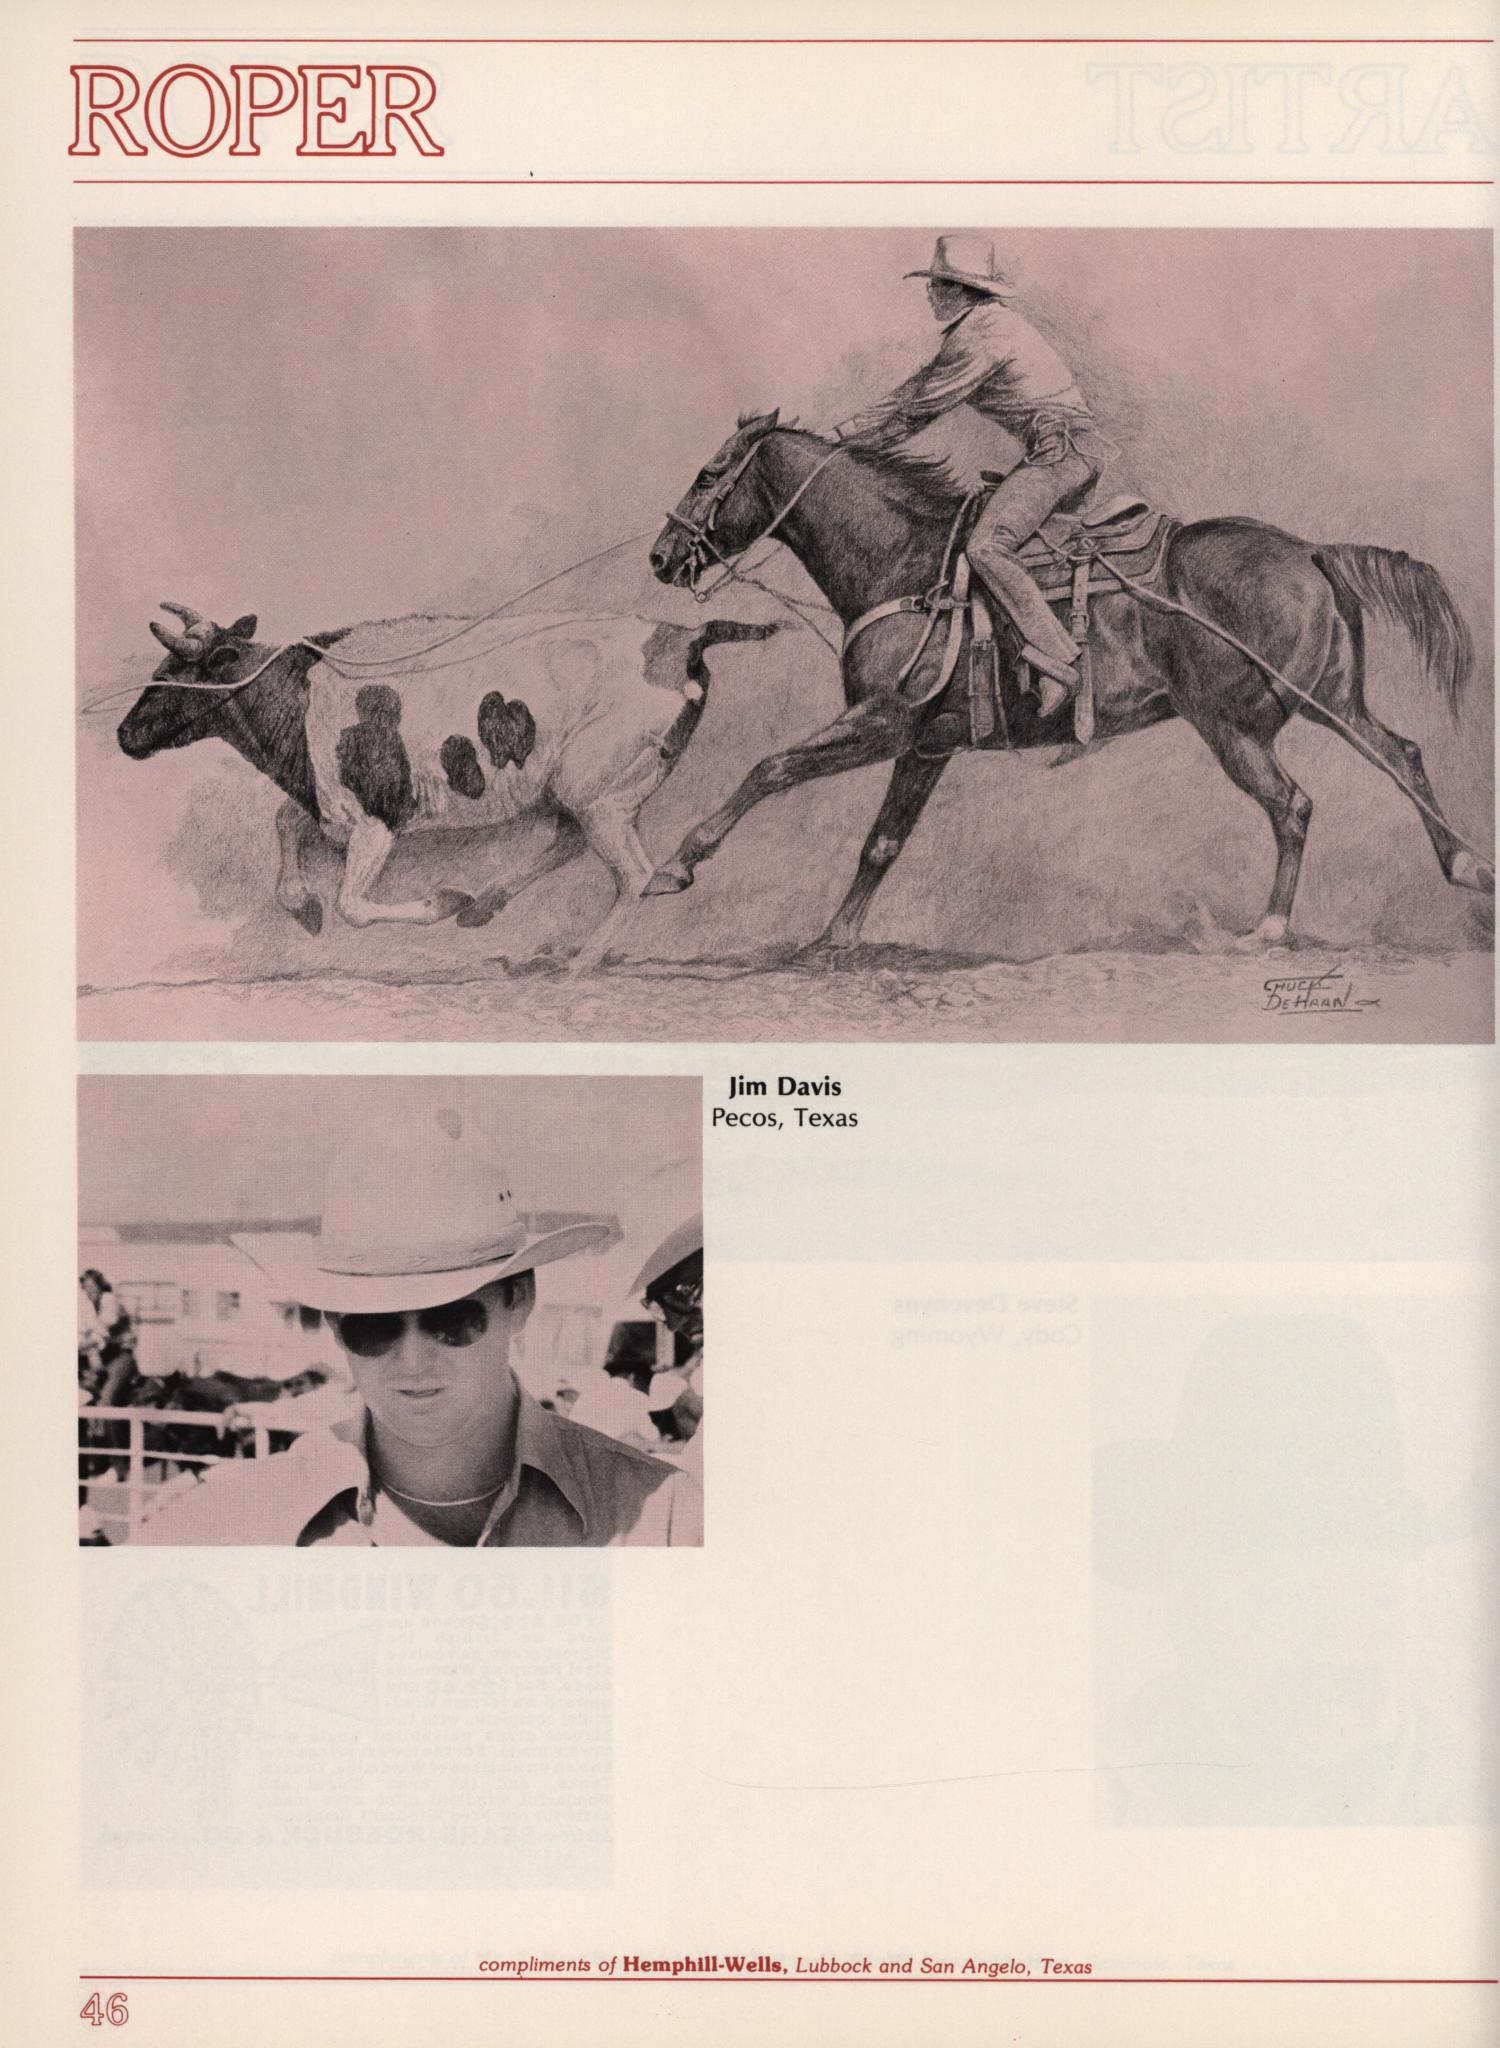 OS Ranch Steer Roping & Art Exhibit, October 2-4, 1982
                                                
                                                    46
                                                